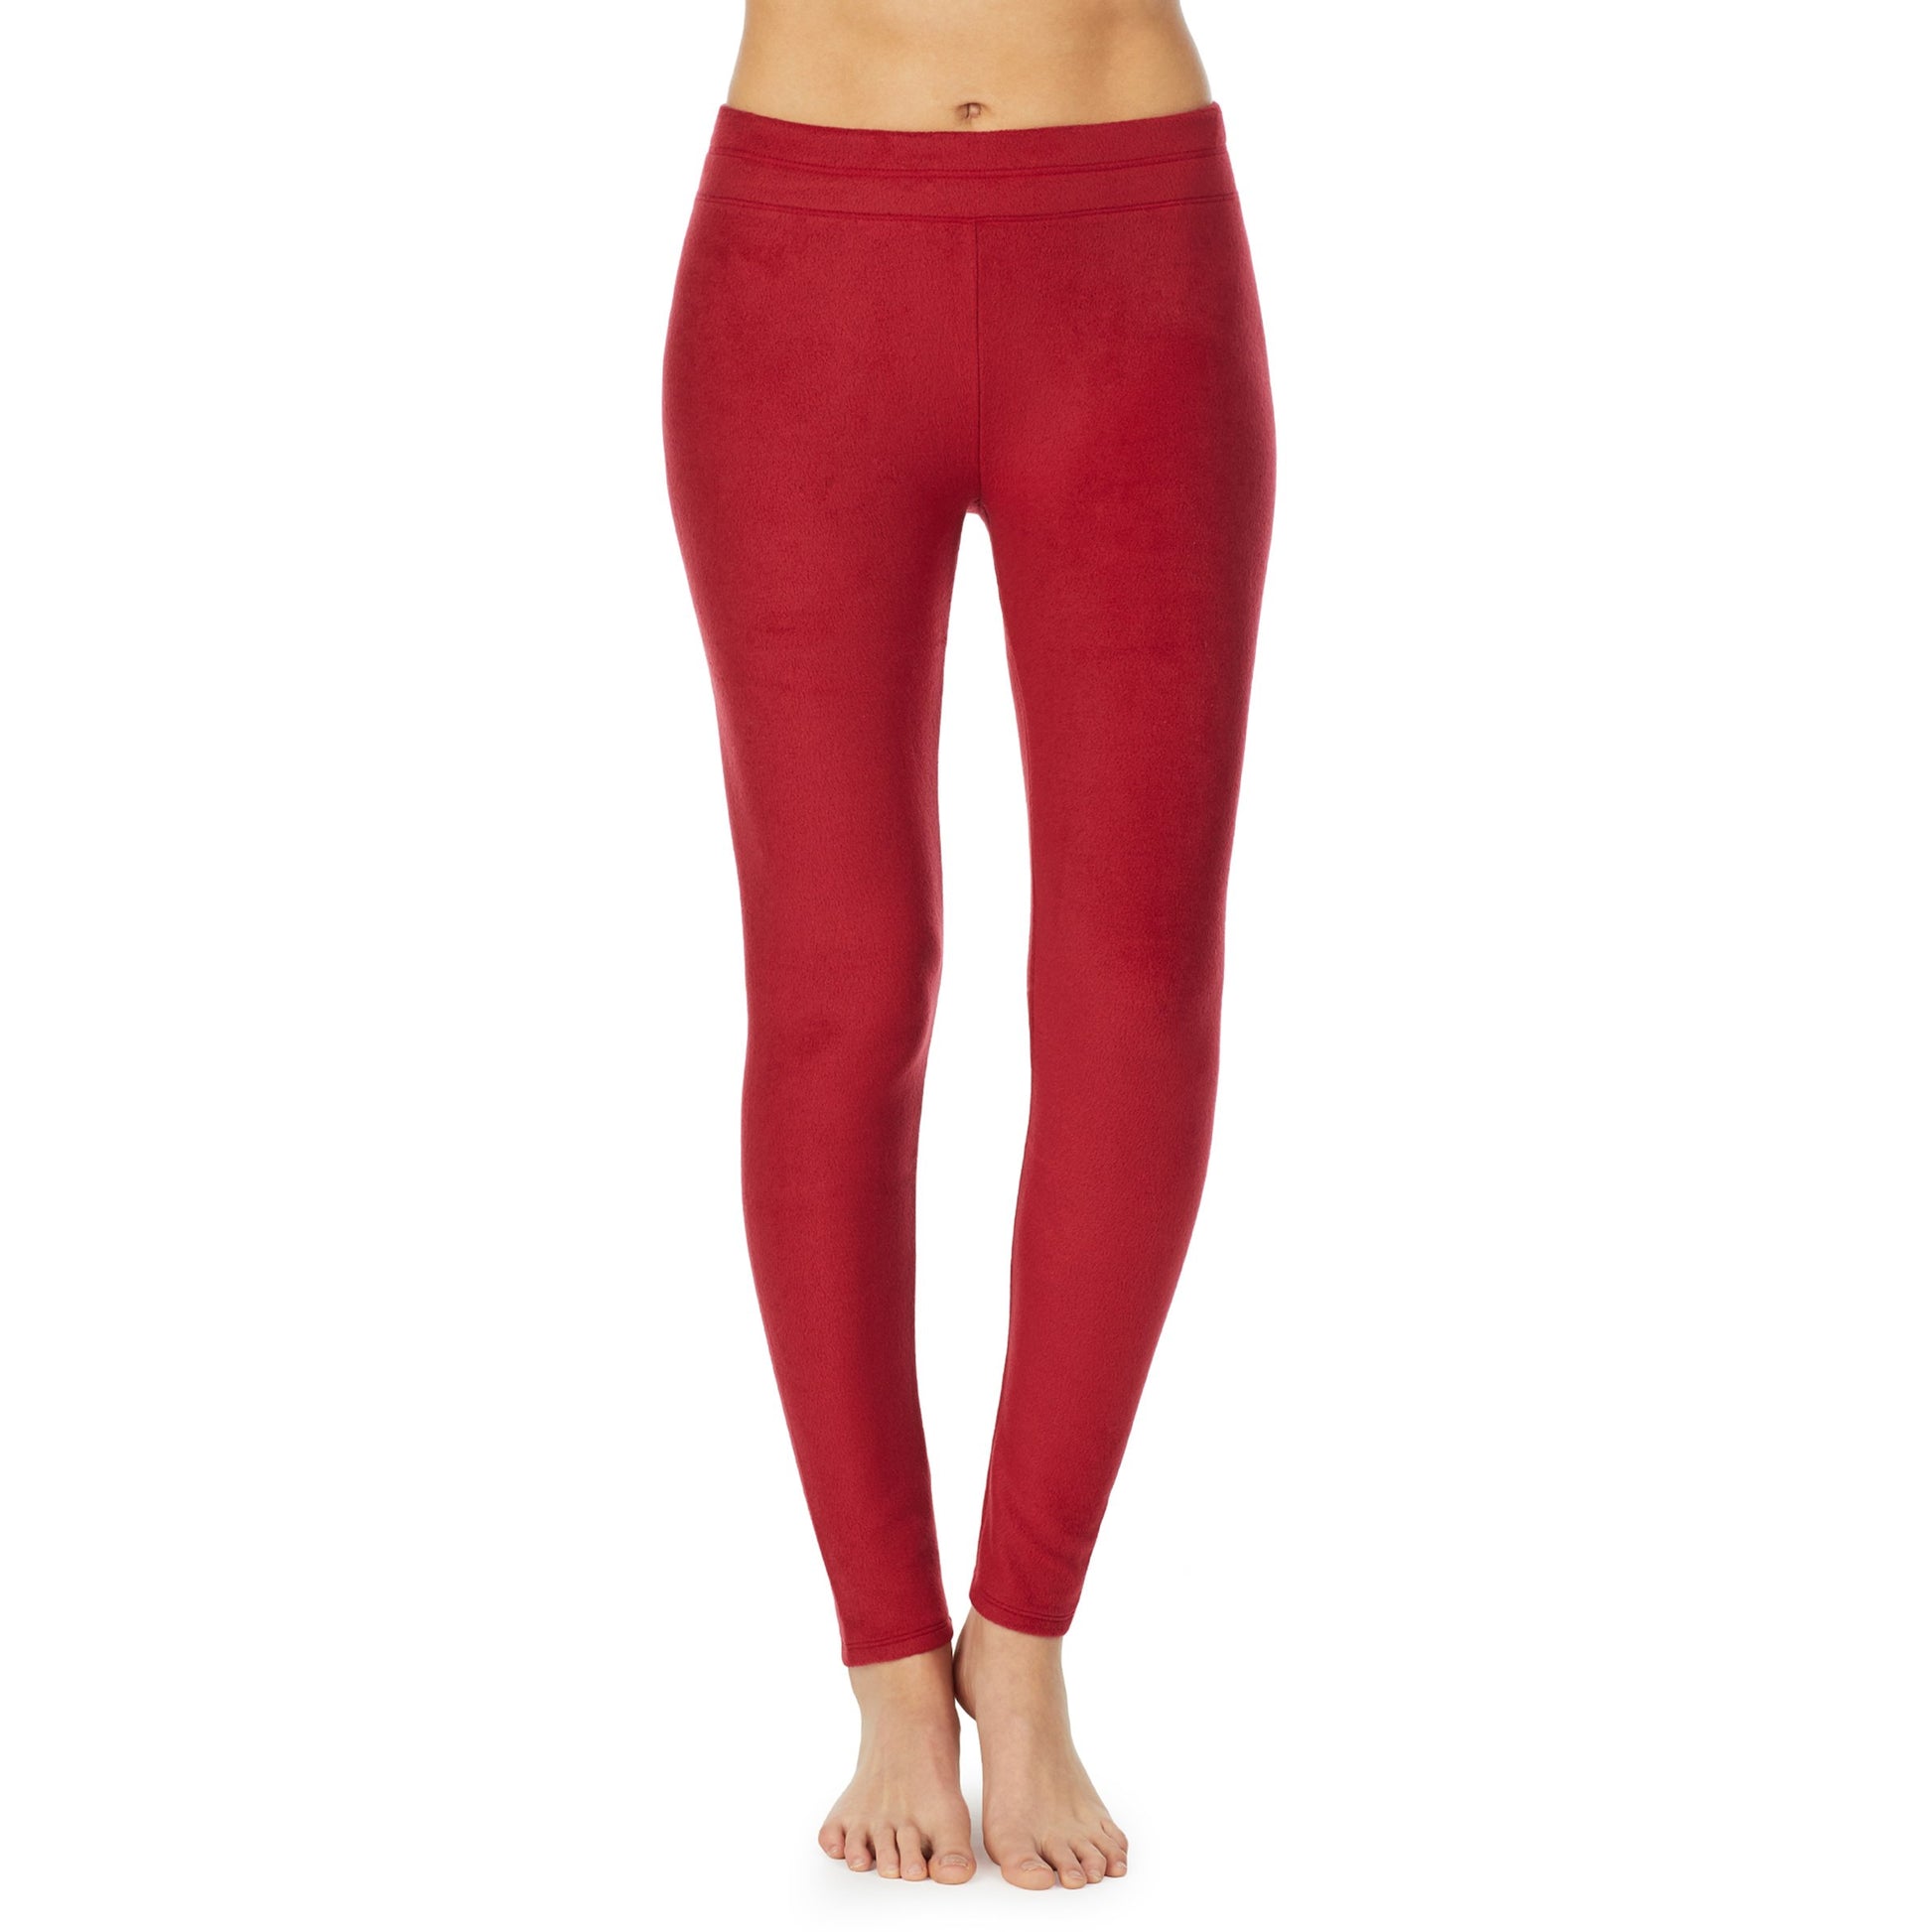 Deep Red;Model is wearing size S. She is 5’9”, Bust 32”, Waist 25.5”, Hips 36”.@A lady wearing fleecewear with stretch legging